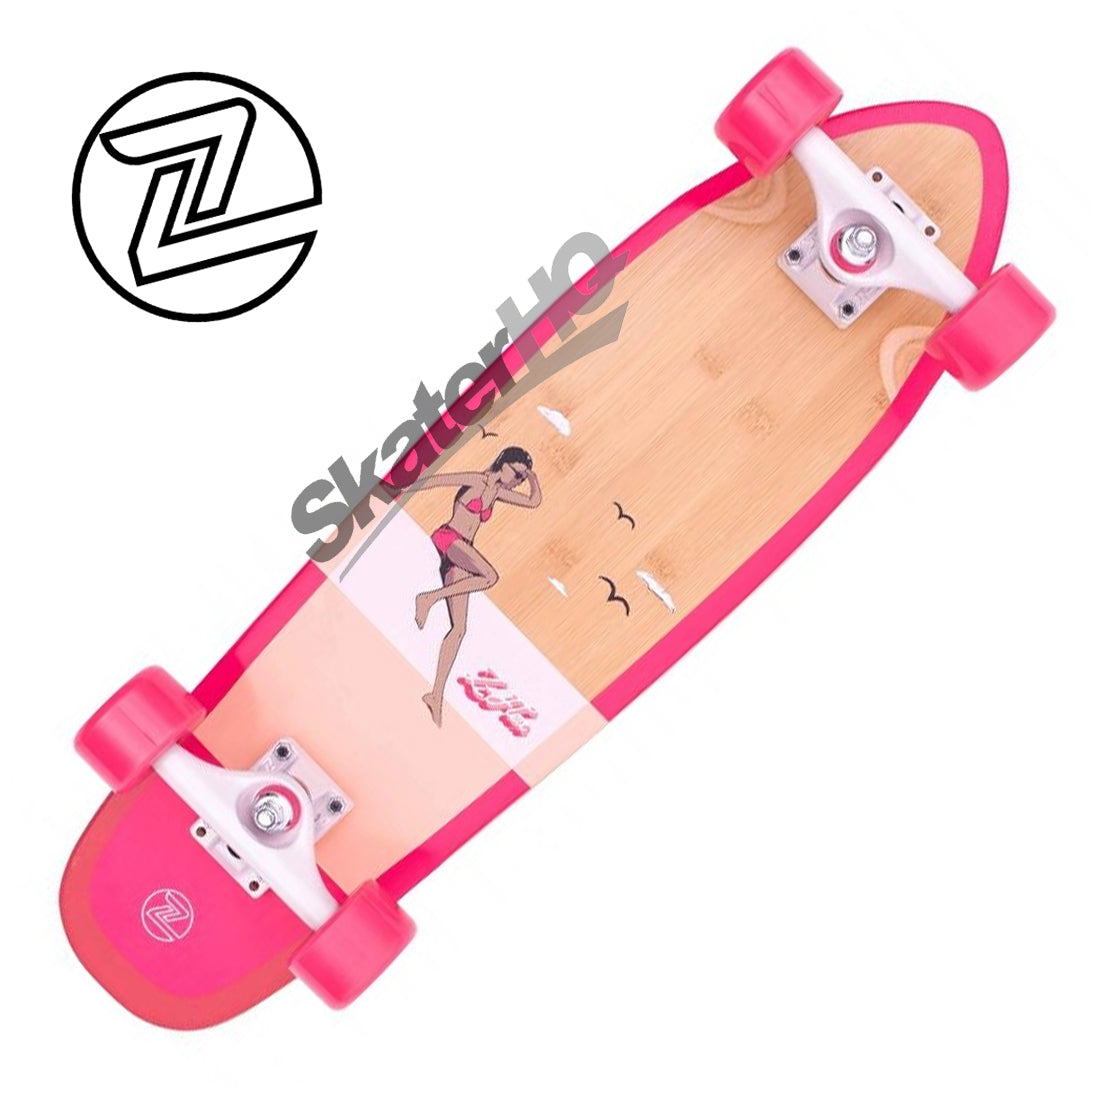 Z-Flex Bamboo 27 Cruiser Complete - Pink Chick Skateboard Compl Cruisers